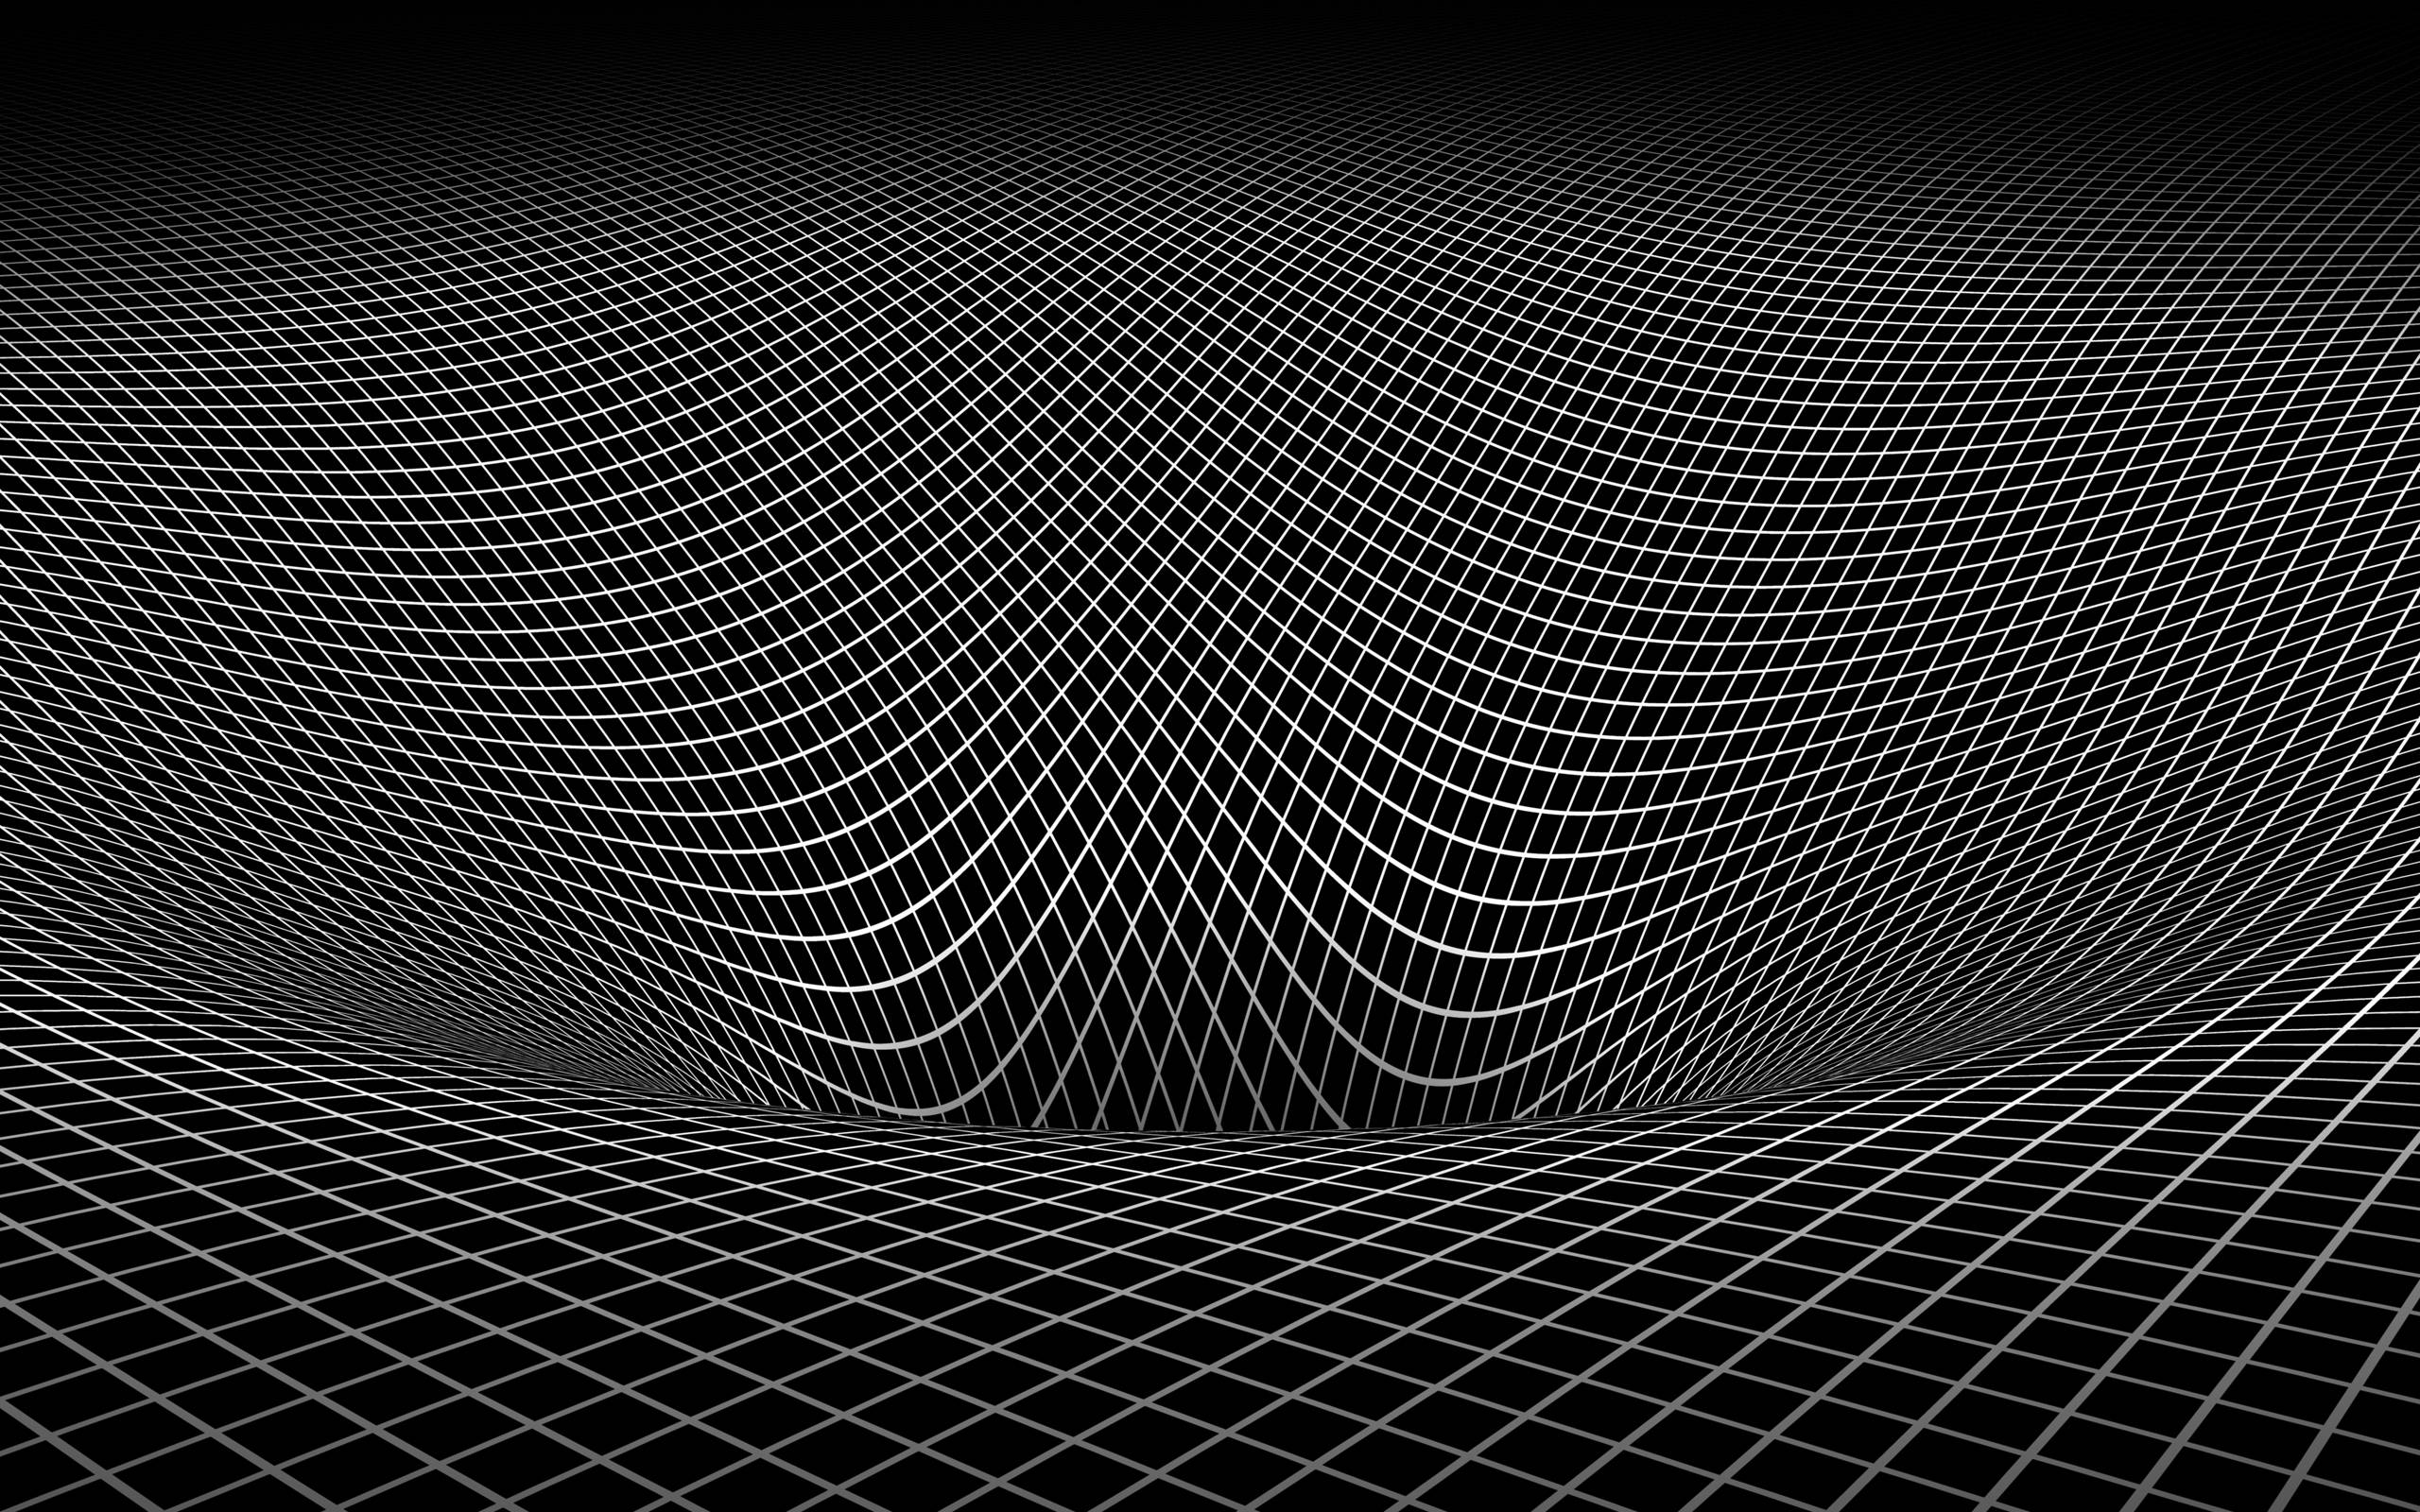 Cool Illusion Wallpaper 31631 2560x1600 px